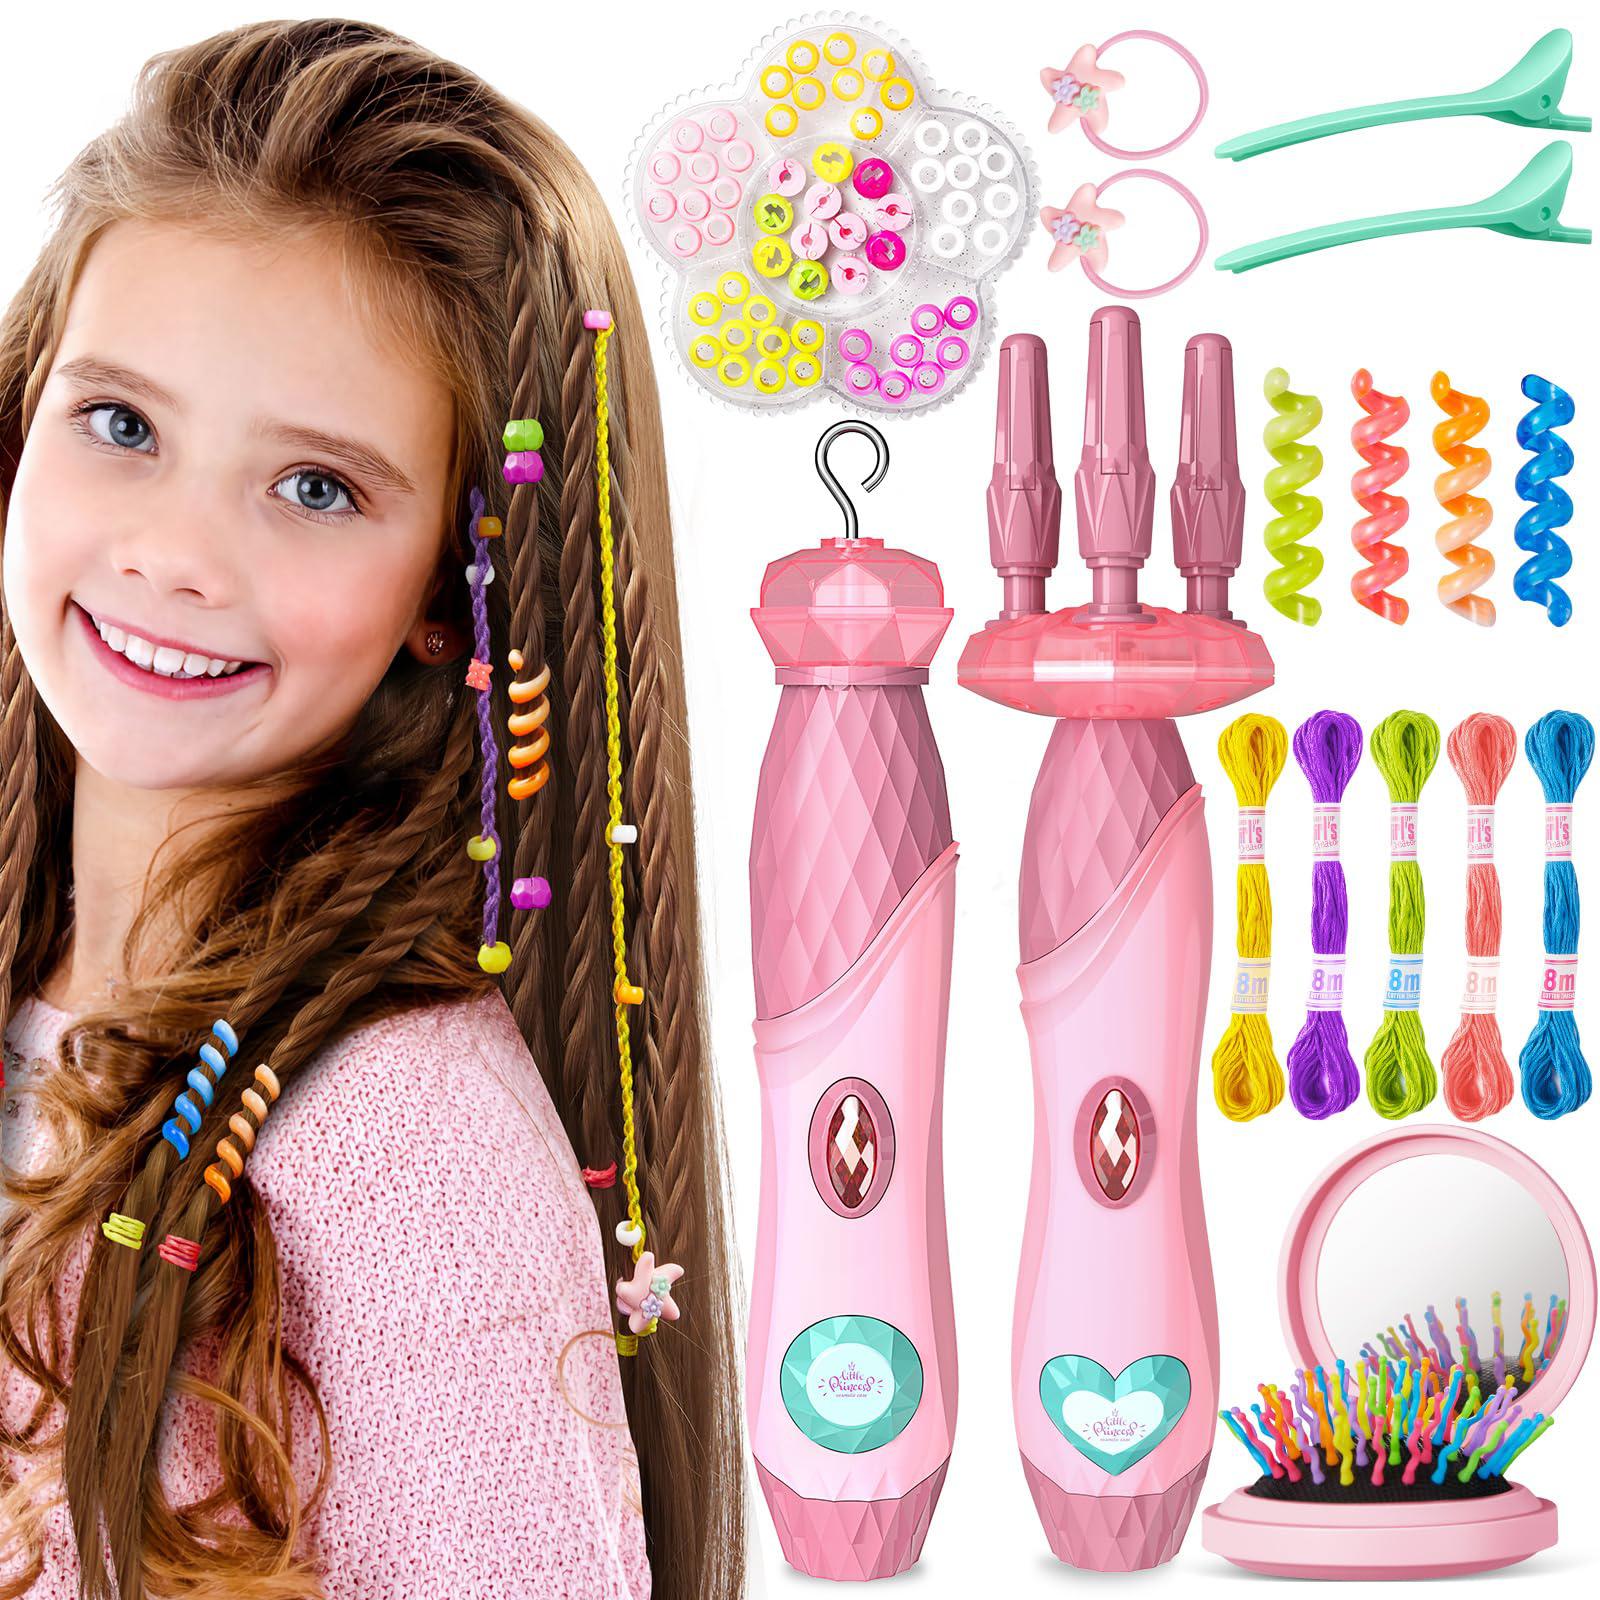 Geyiie geyiie diy hair tools for grils, salon makeup set with hair braider,  rope braiding machine, hair clips , little girls makeup